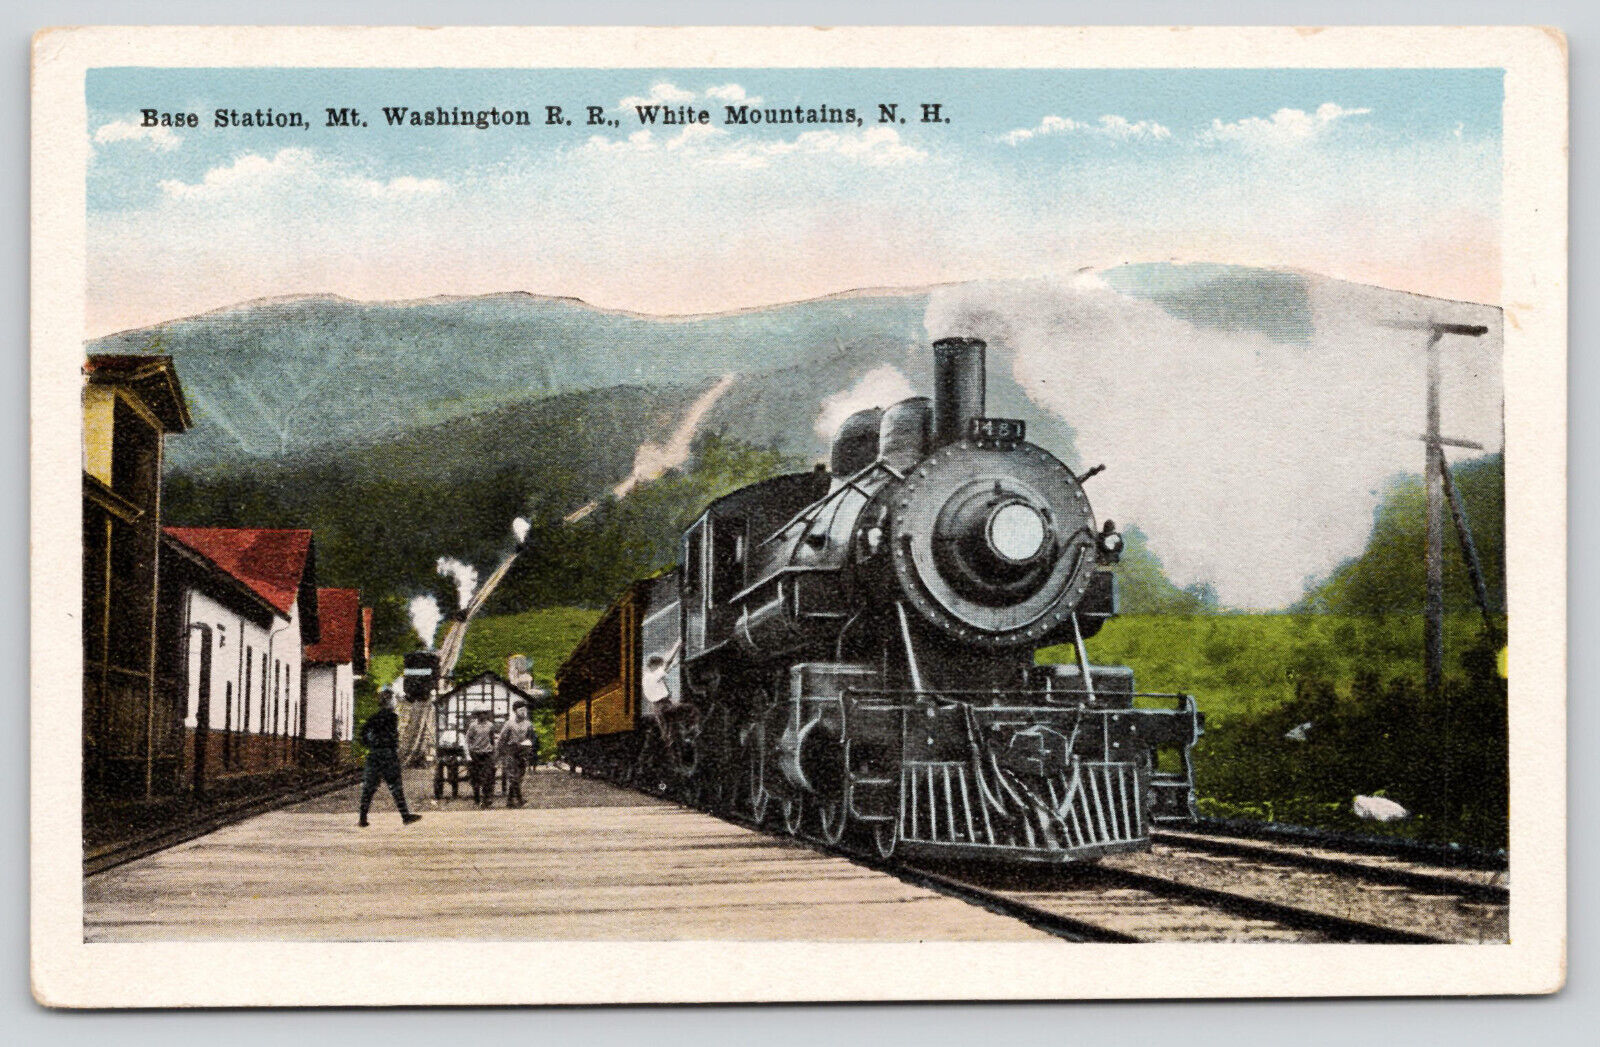 Marshfield Station NH New Hampshire - Base Station Mt Washington Cog Railway